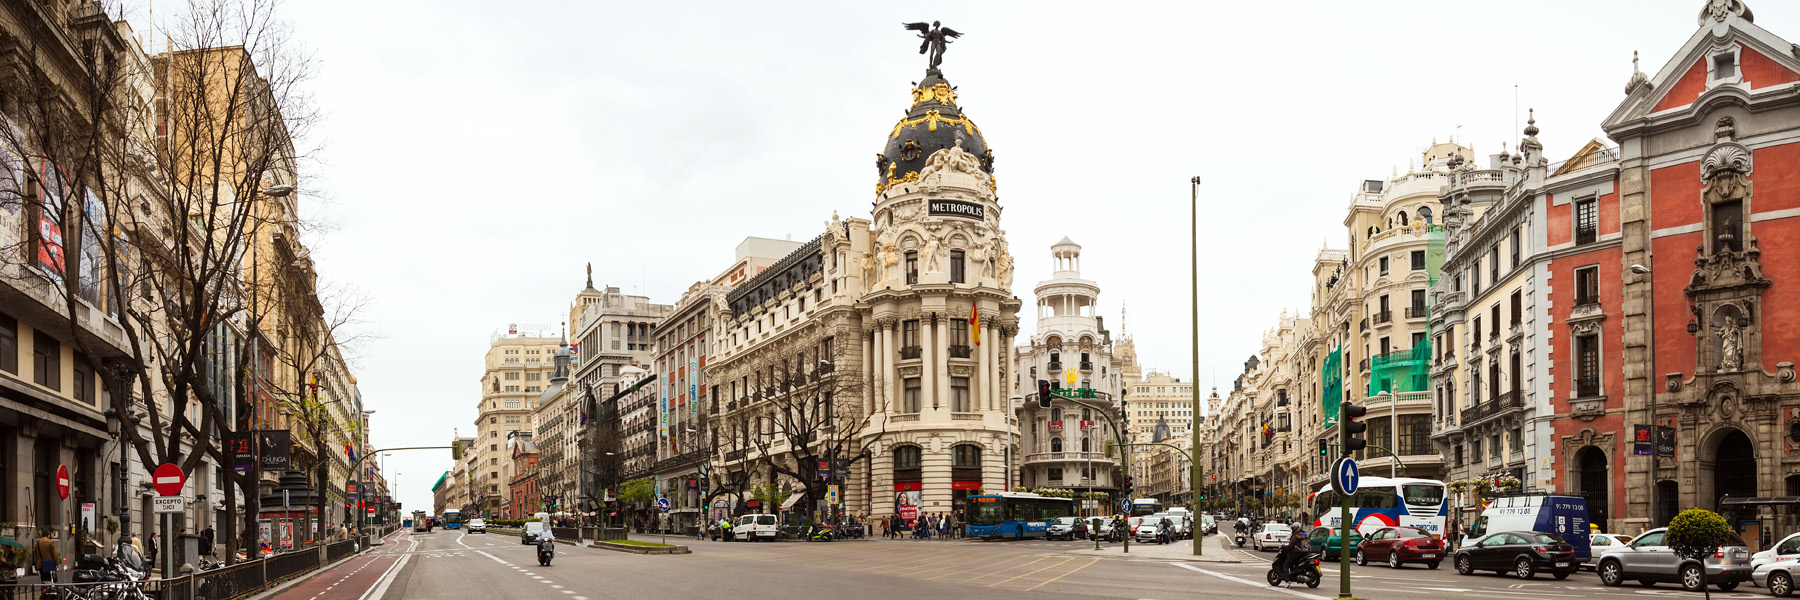 Street scene in the city of Madrid, Spain 